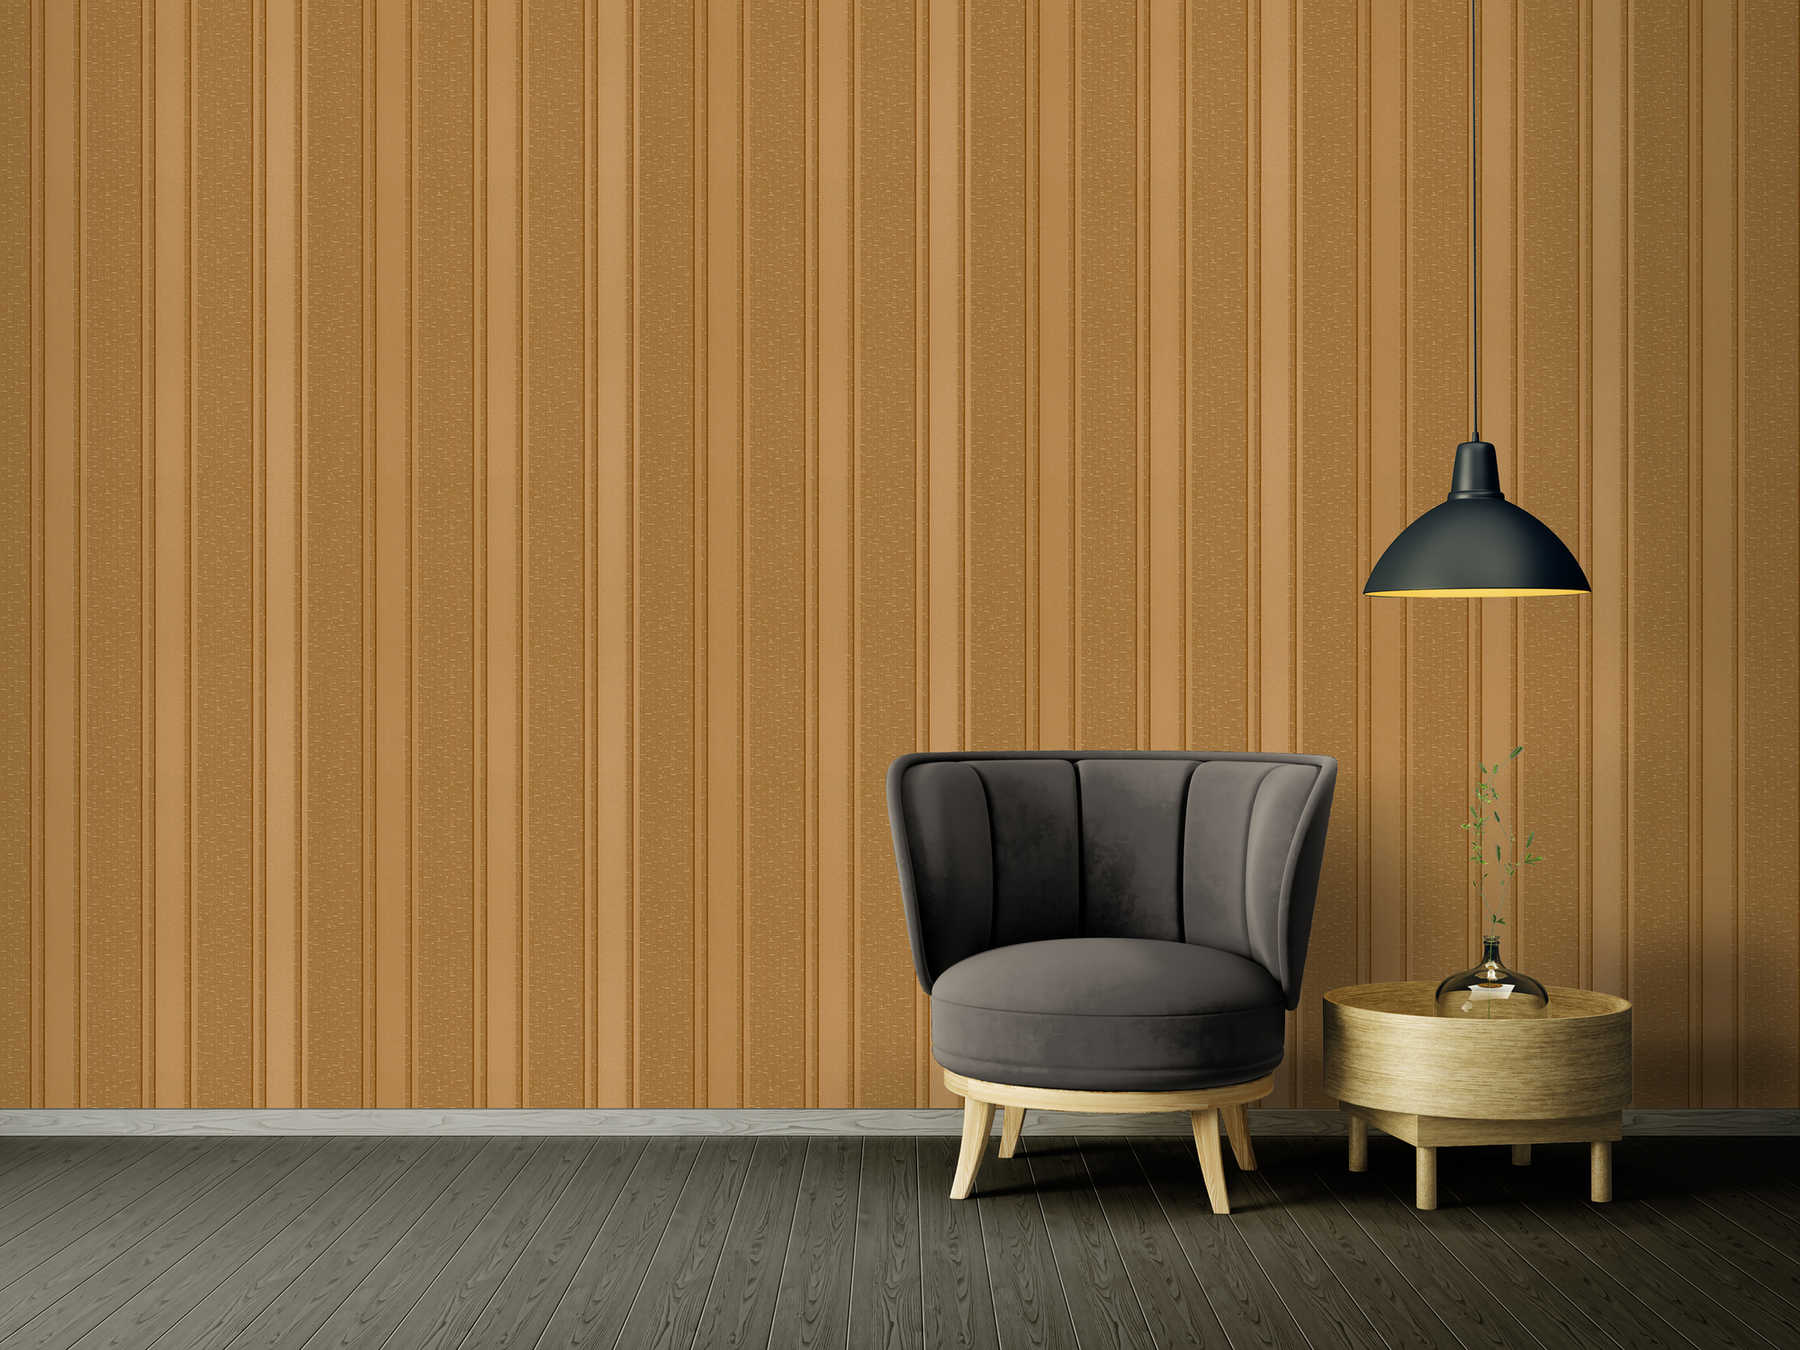             Designer wallpaper VERSACE golden stripes - metallic
        